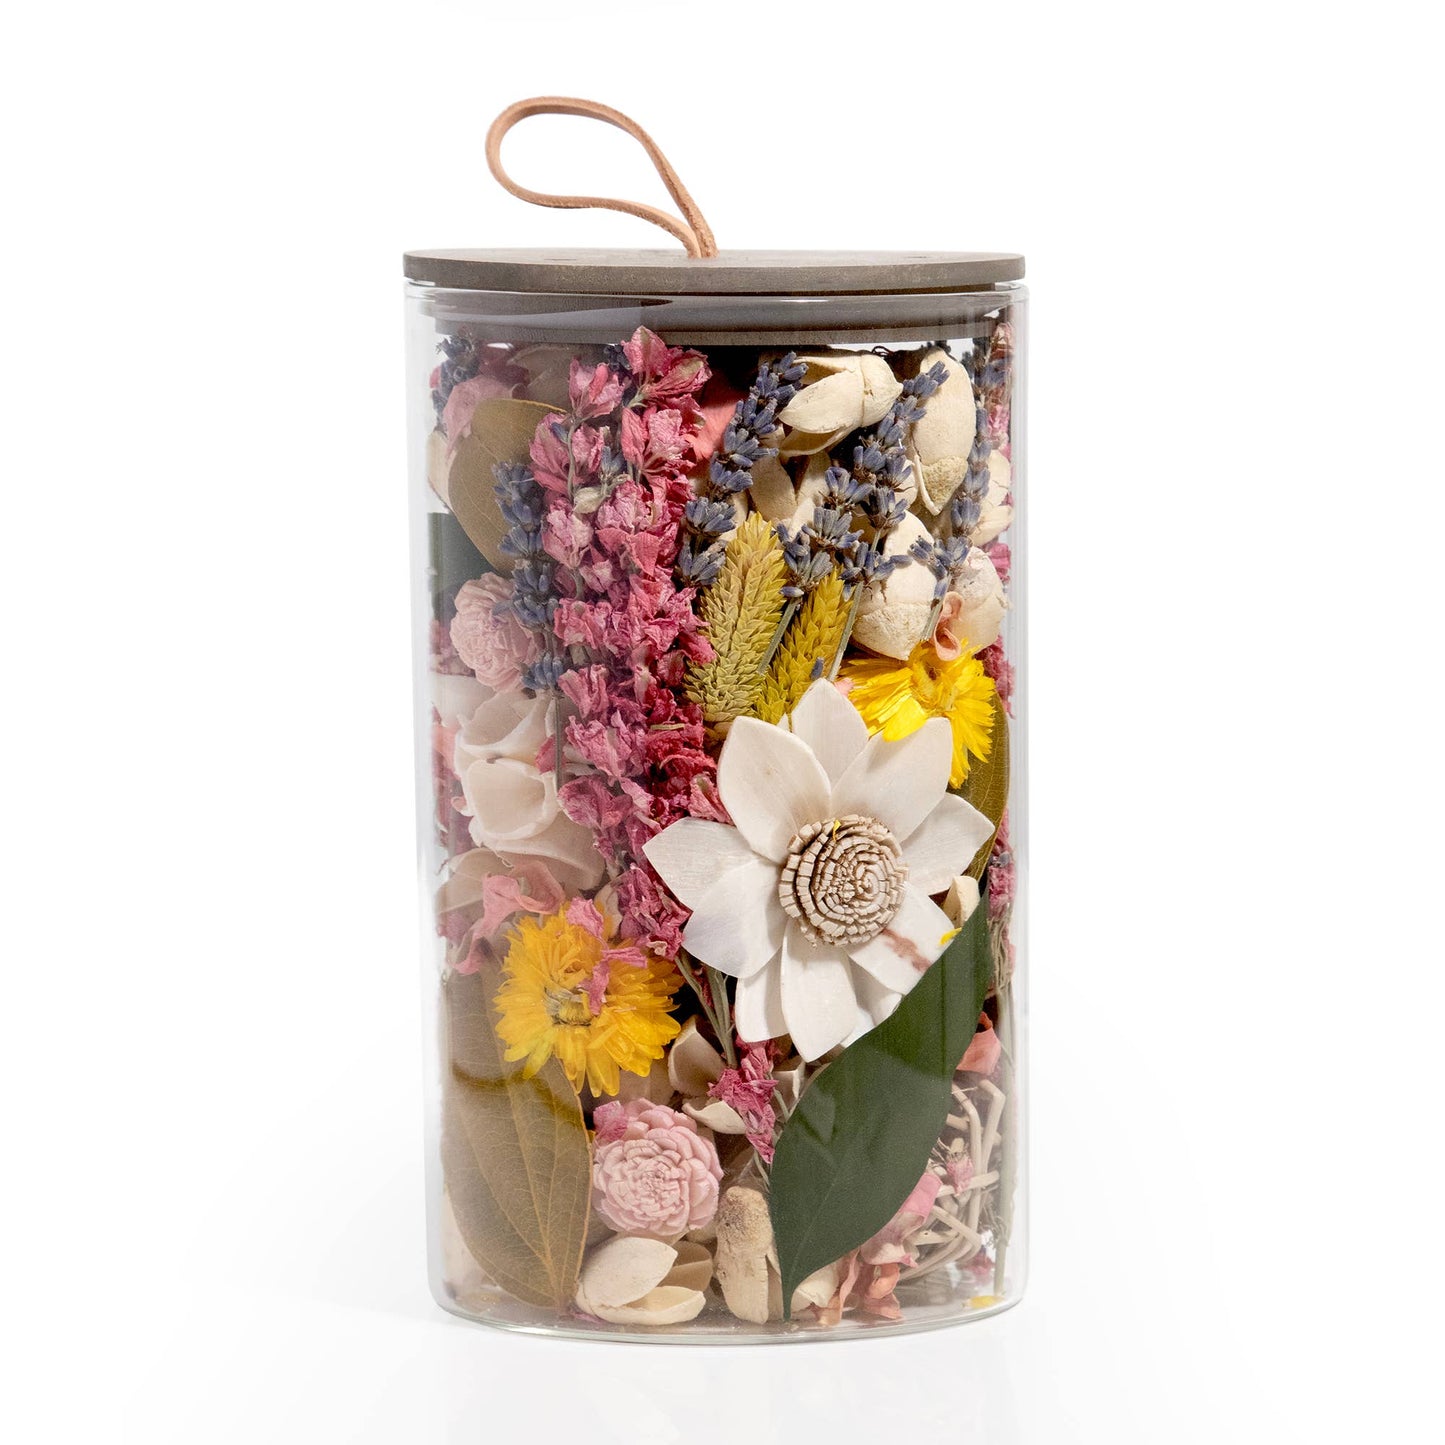 Secrets of Spring Potpourri Jar